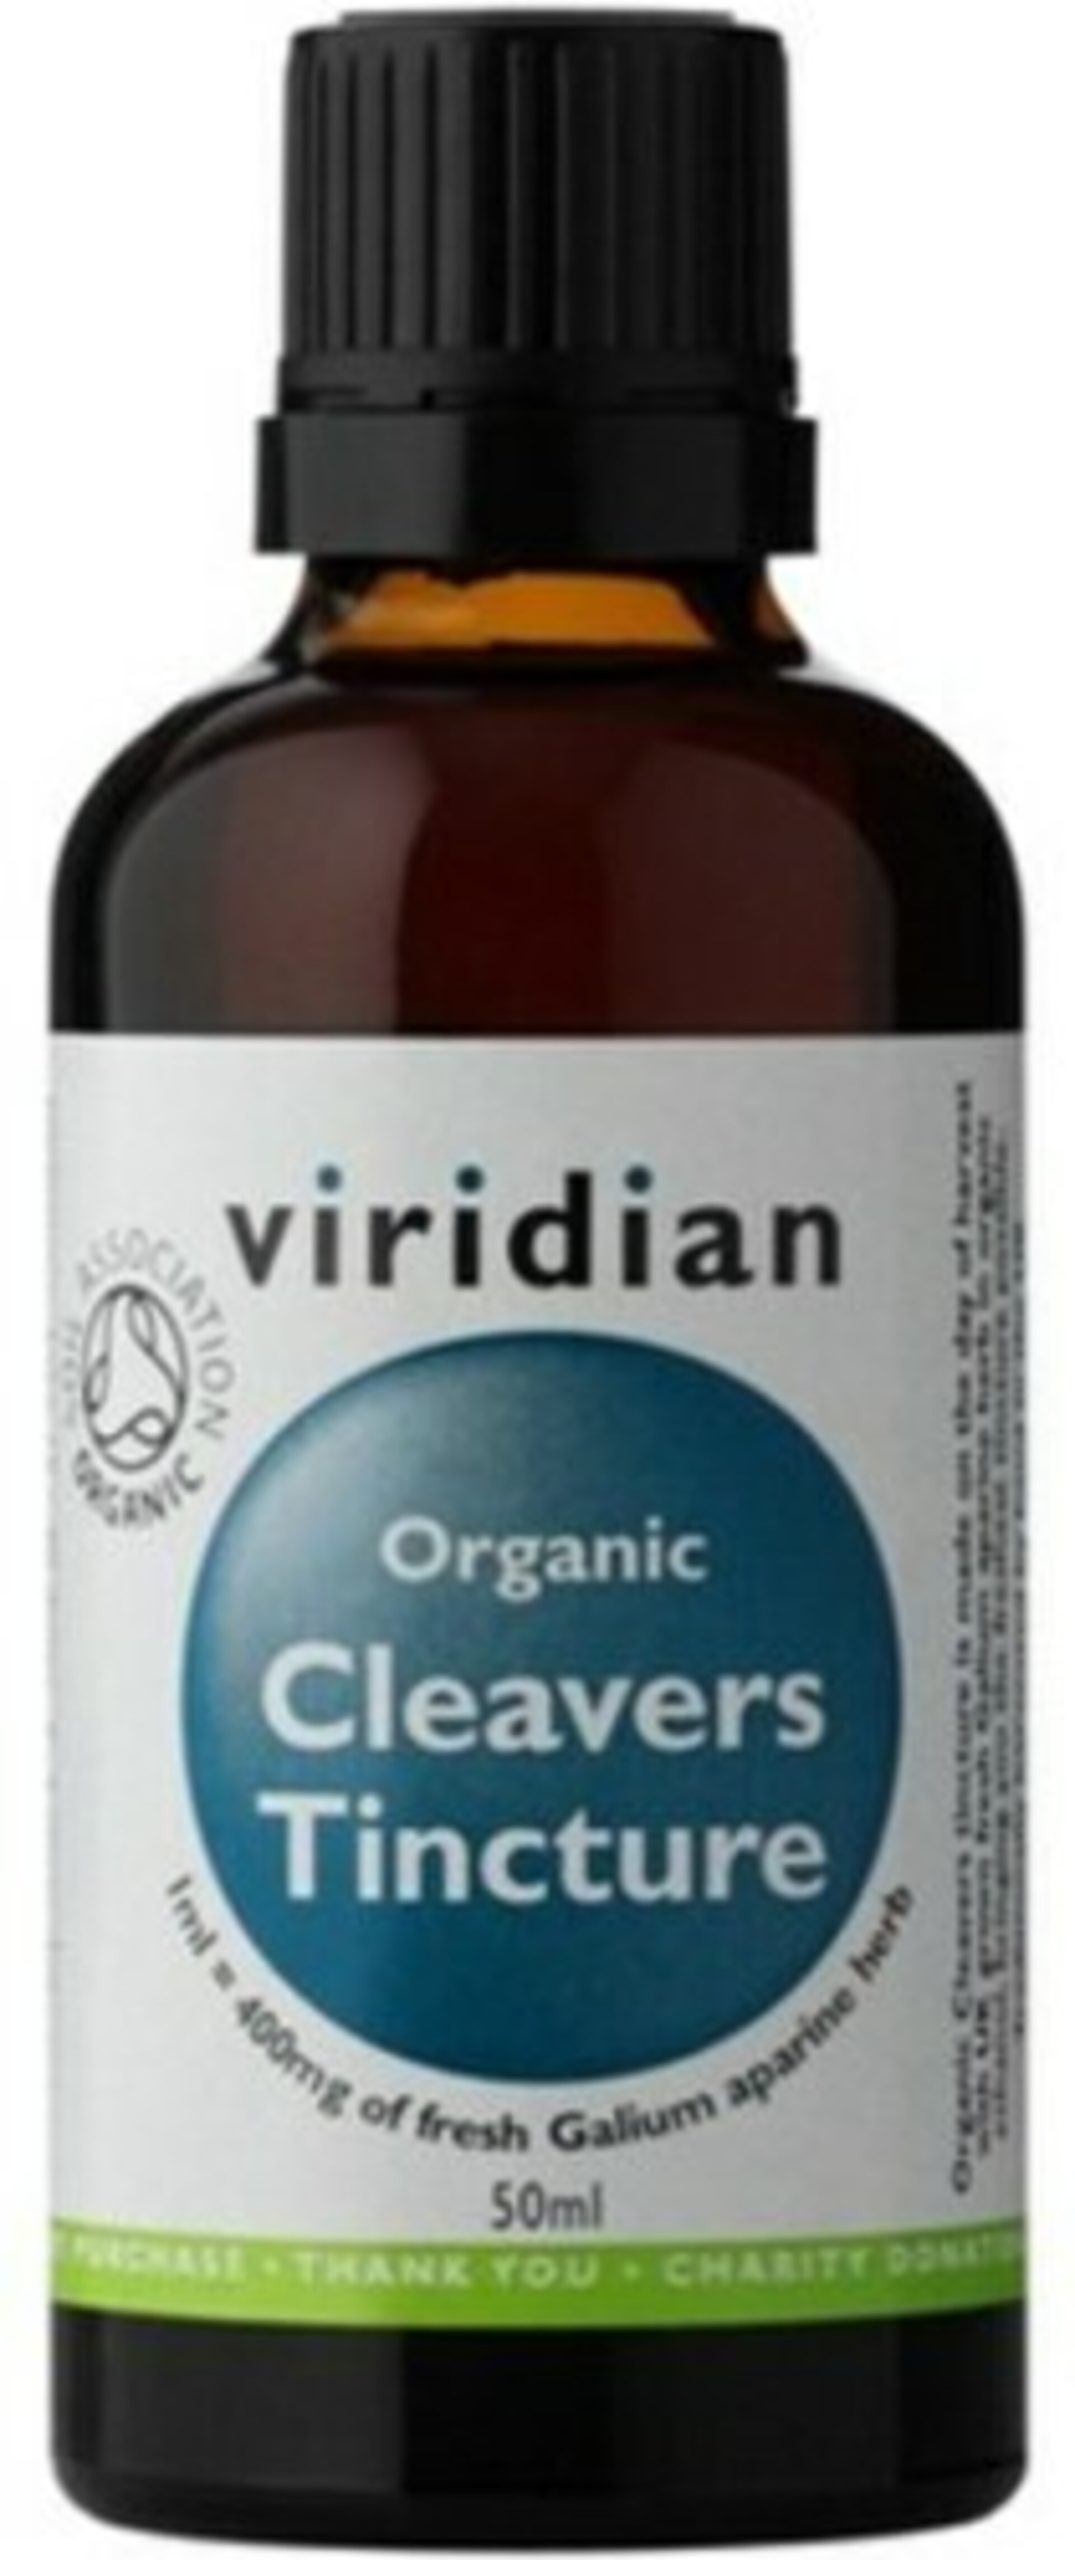 Viridian Cleavers Tincture Organic 50ml - expirace